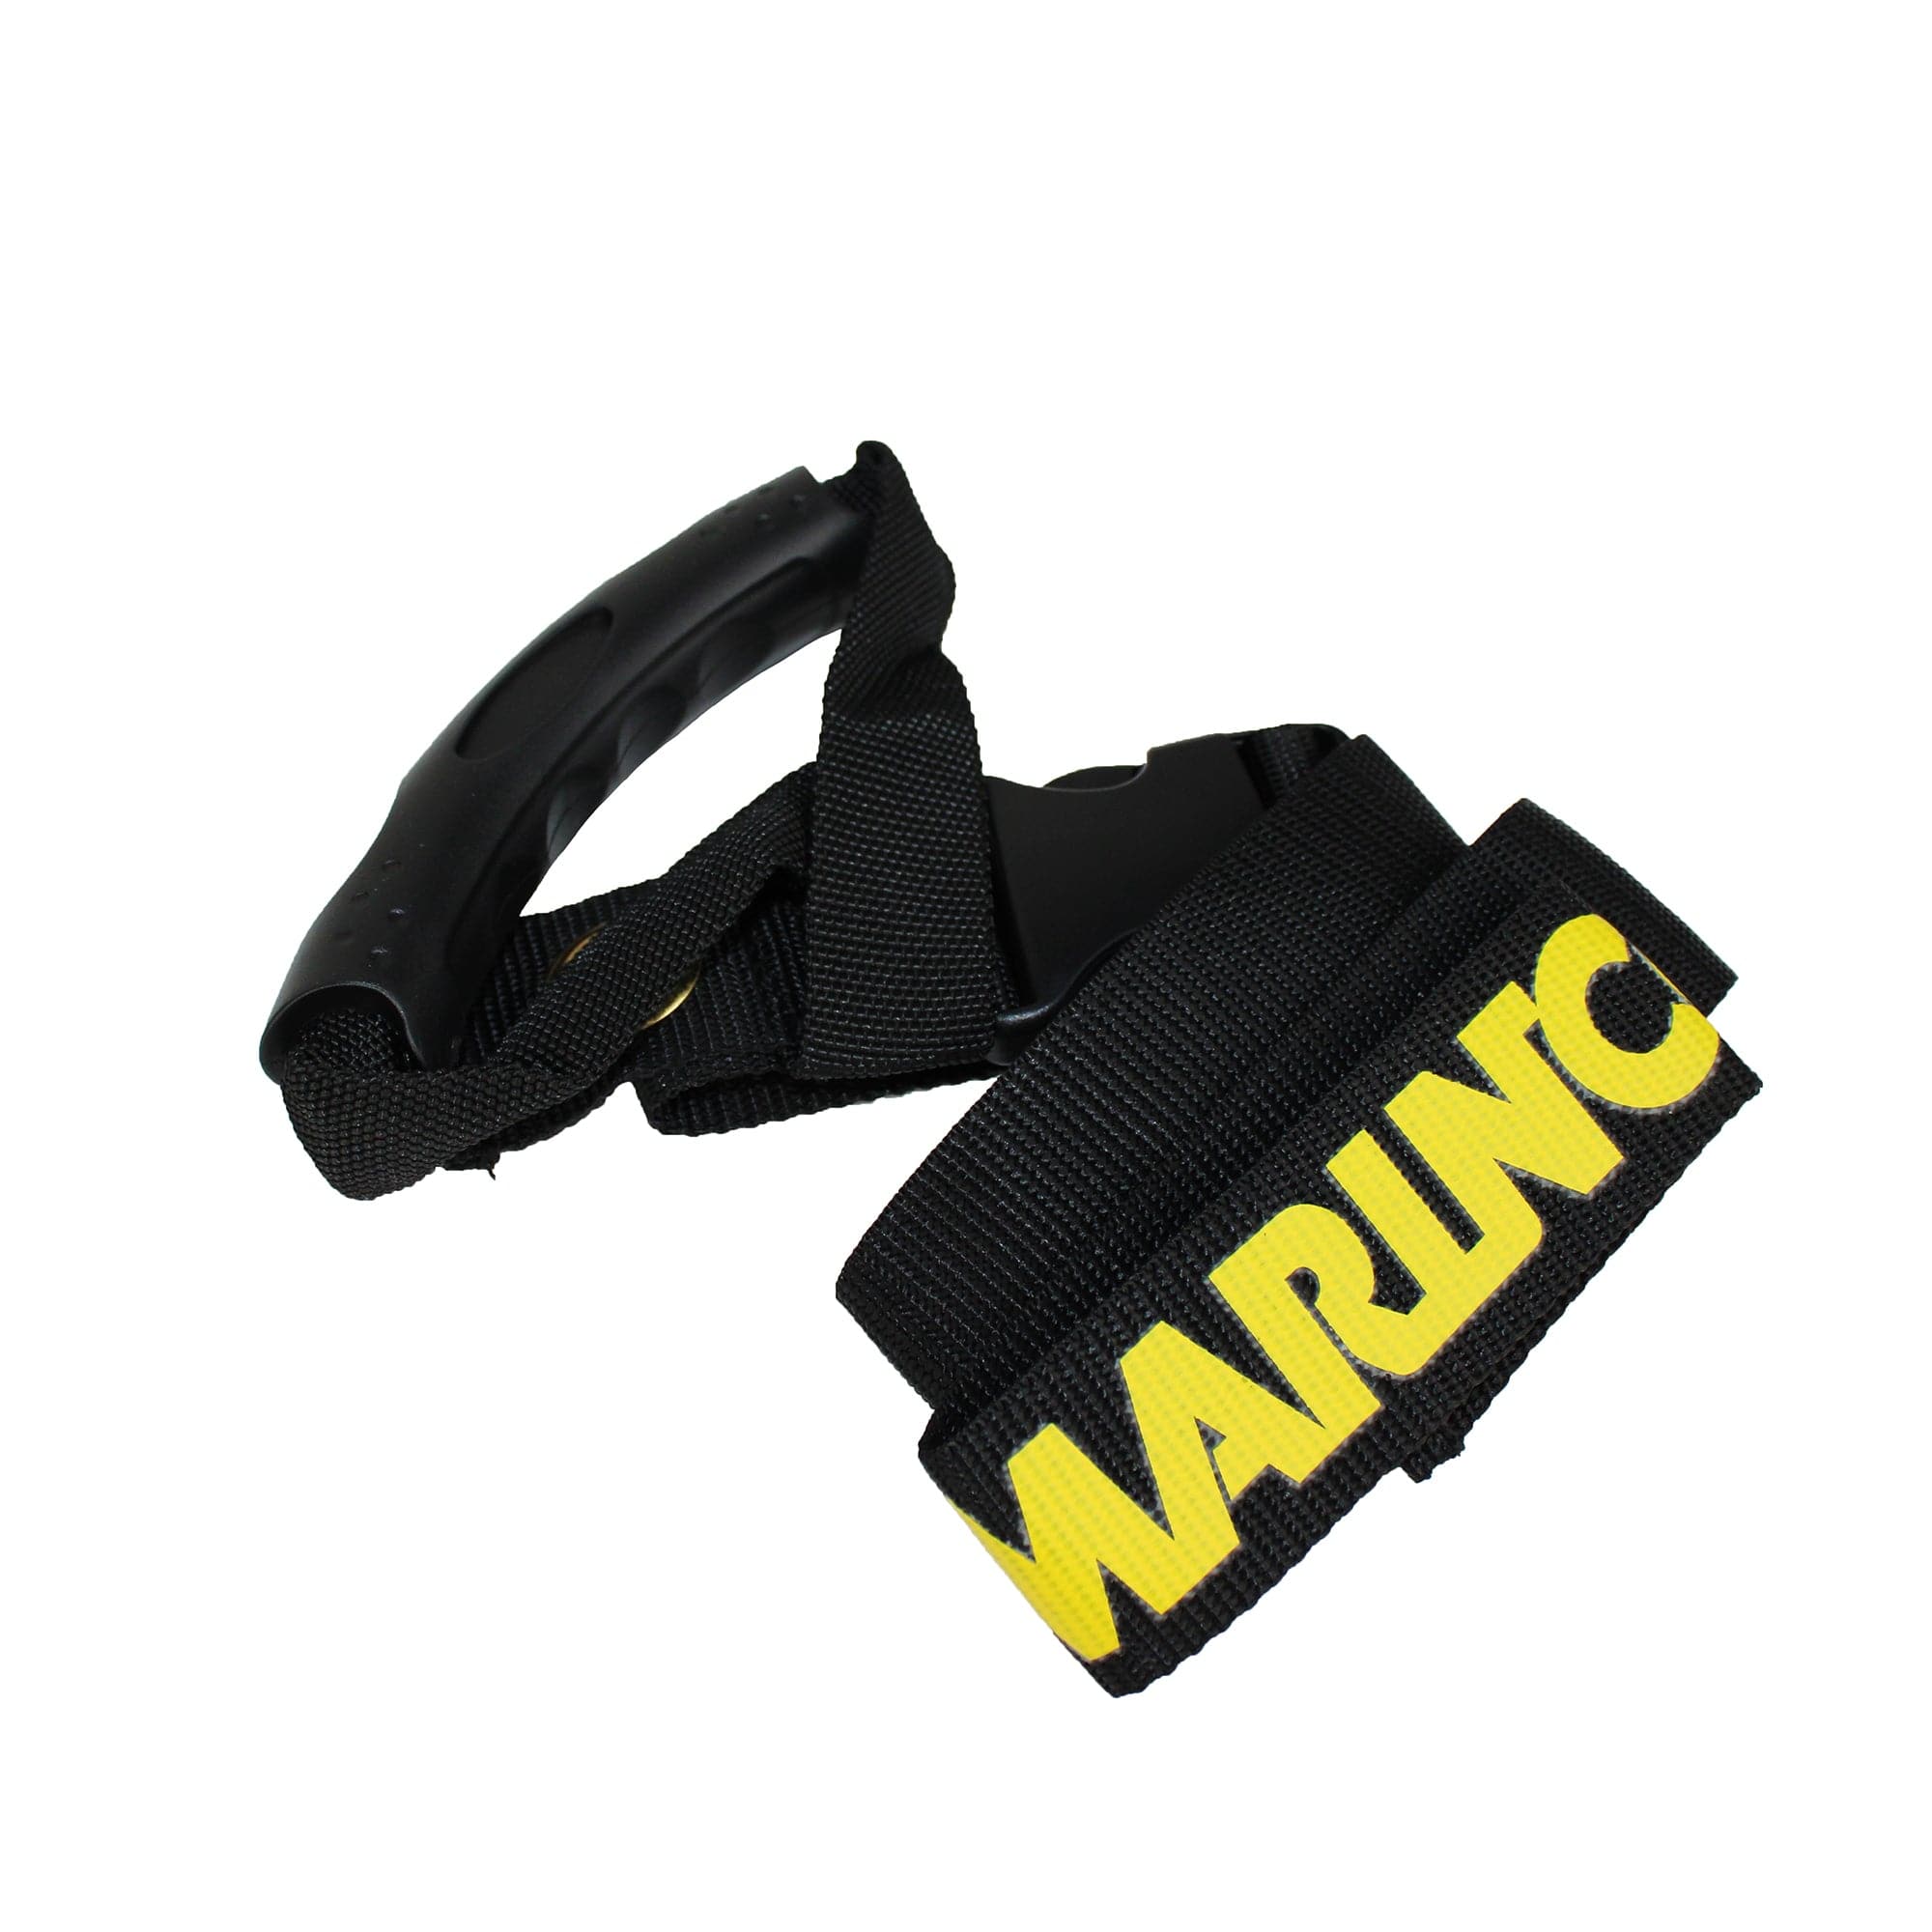 Marinco STRAP Power Cord Organizer/Carrying Strap